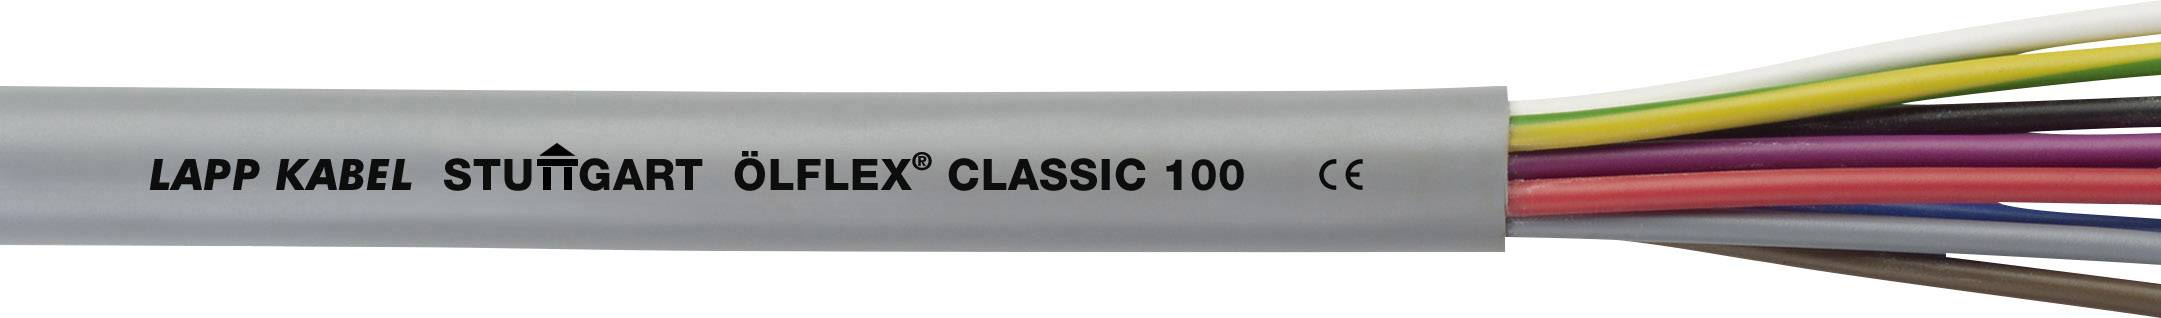 LAPP KABEL Steuerleitung ÖLFLEX® CLASSIC 100 2 x 2.5 mm² Grau LappKabel 1120800/100 100 m